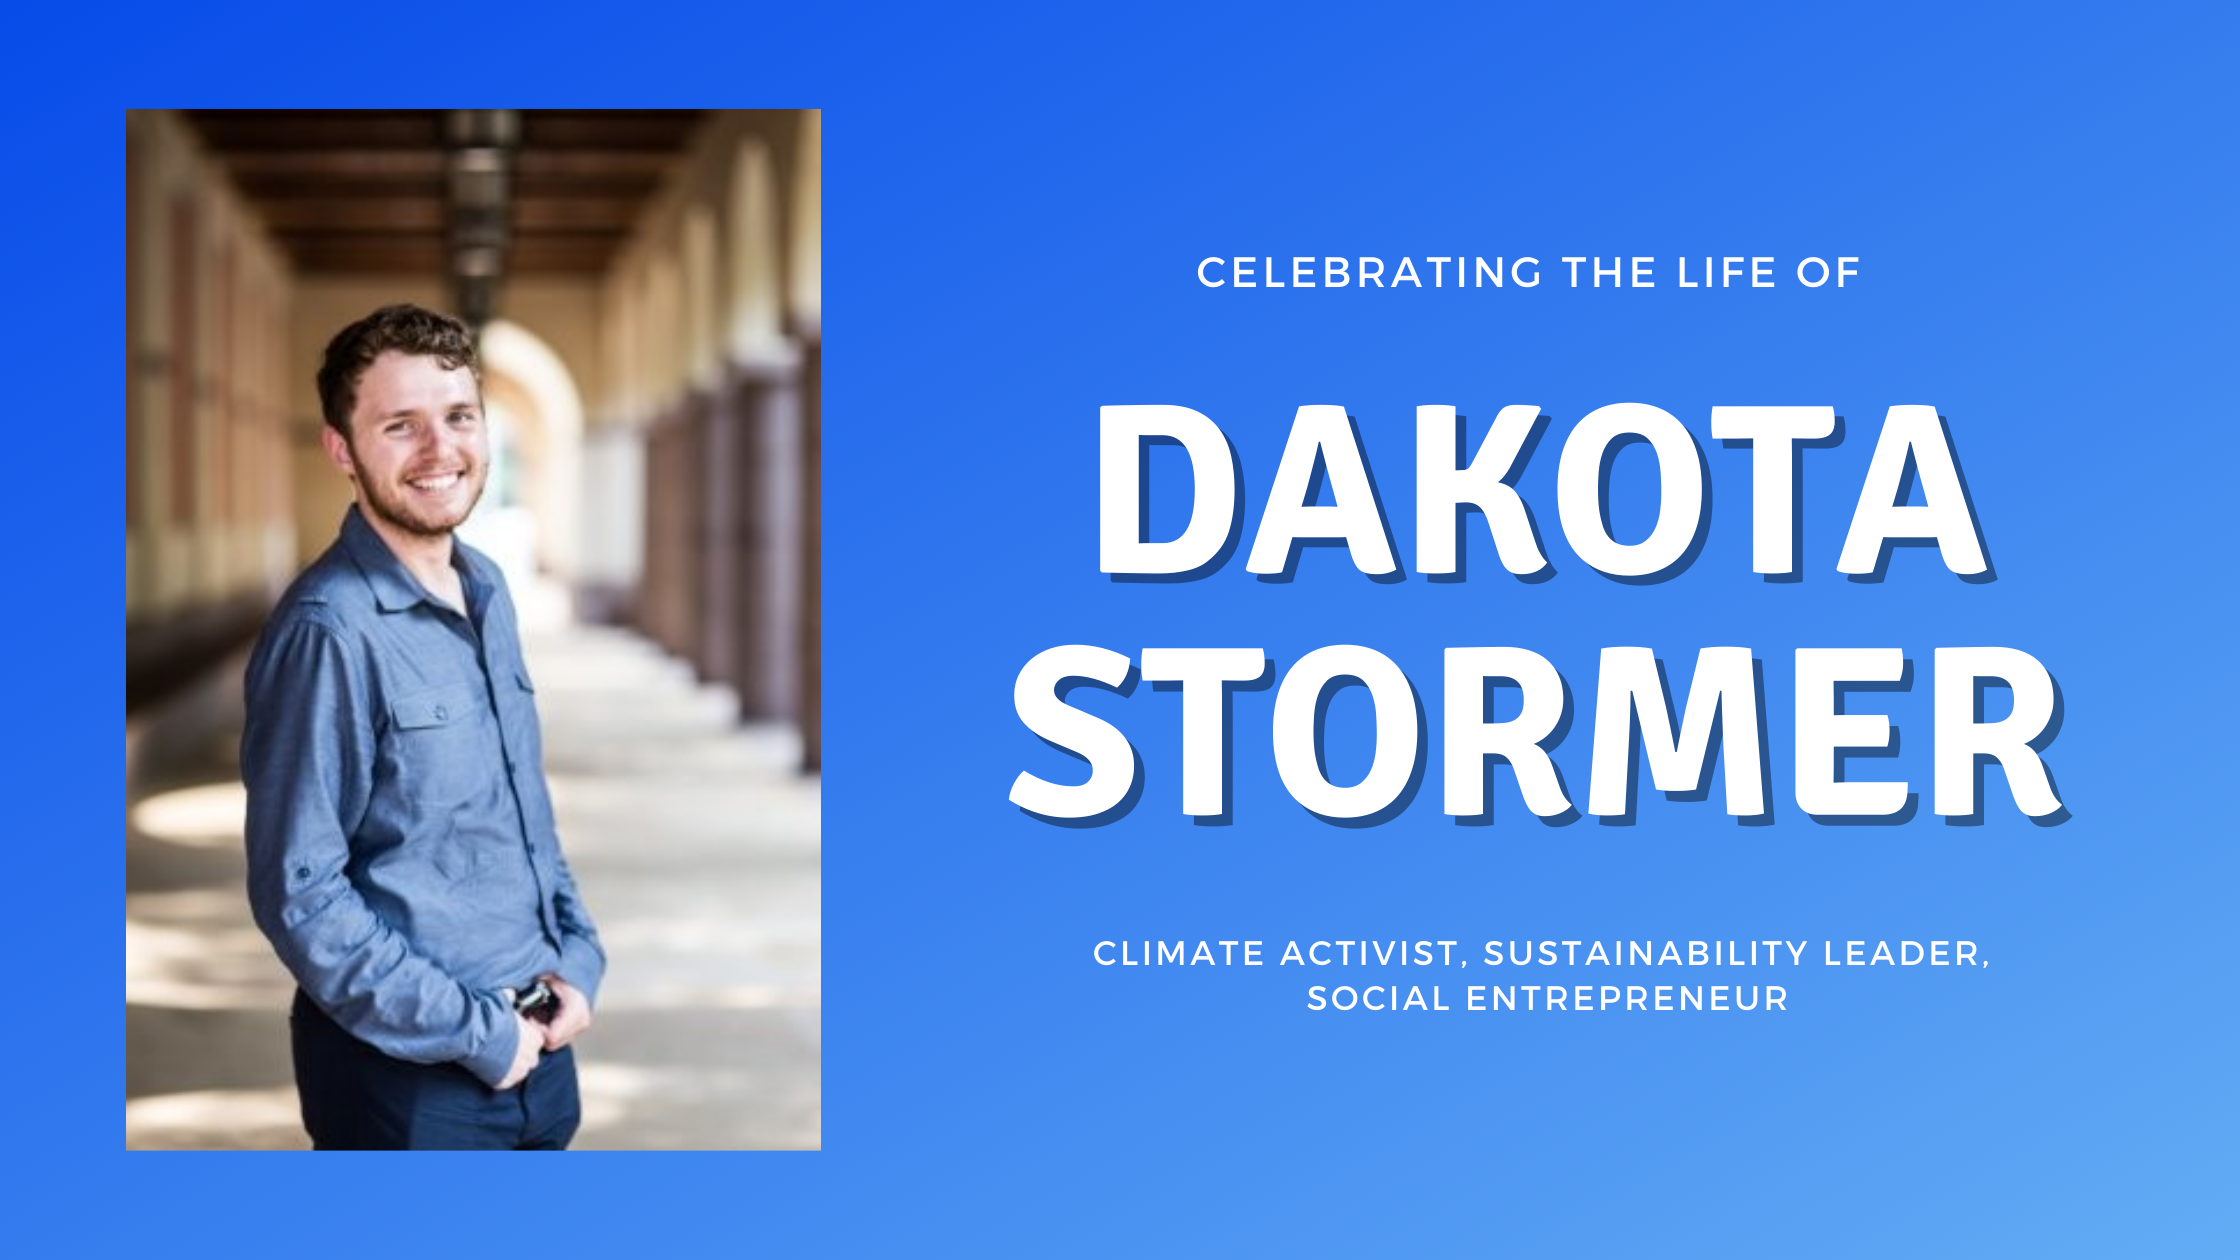 Celebrating the Life of Dakota Stormer, Net Impact